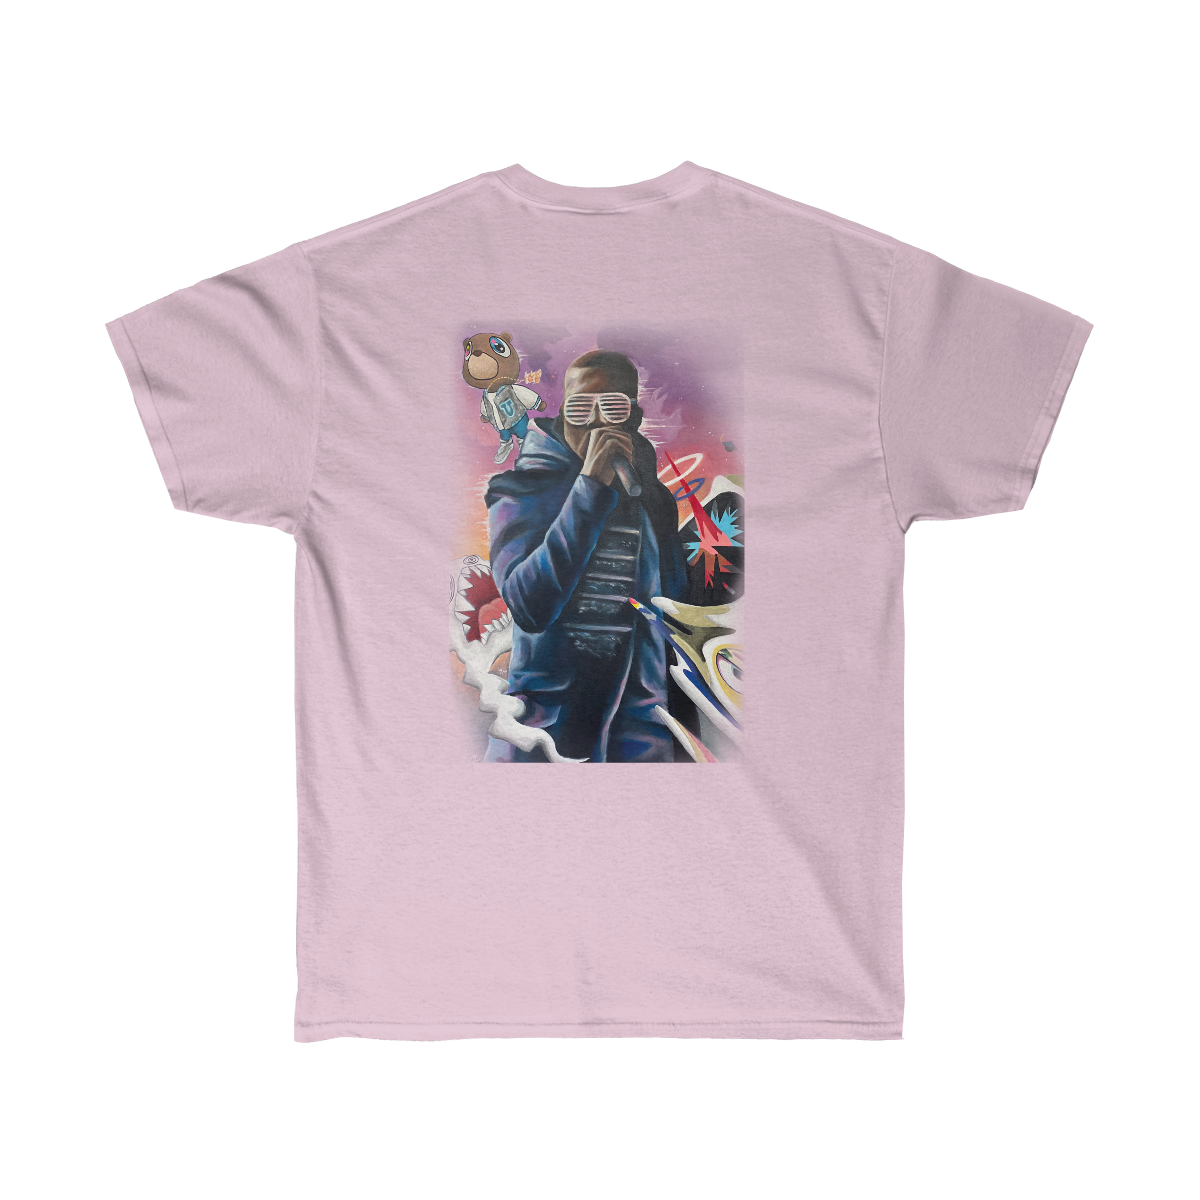 Kanye Graduation (Double-Sided) - T-Shirt - Tommy Manning Art